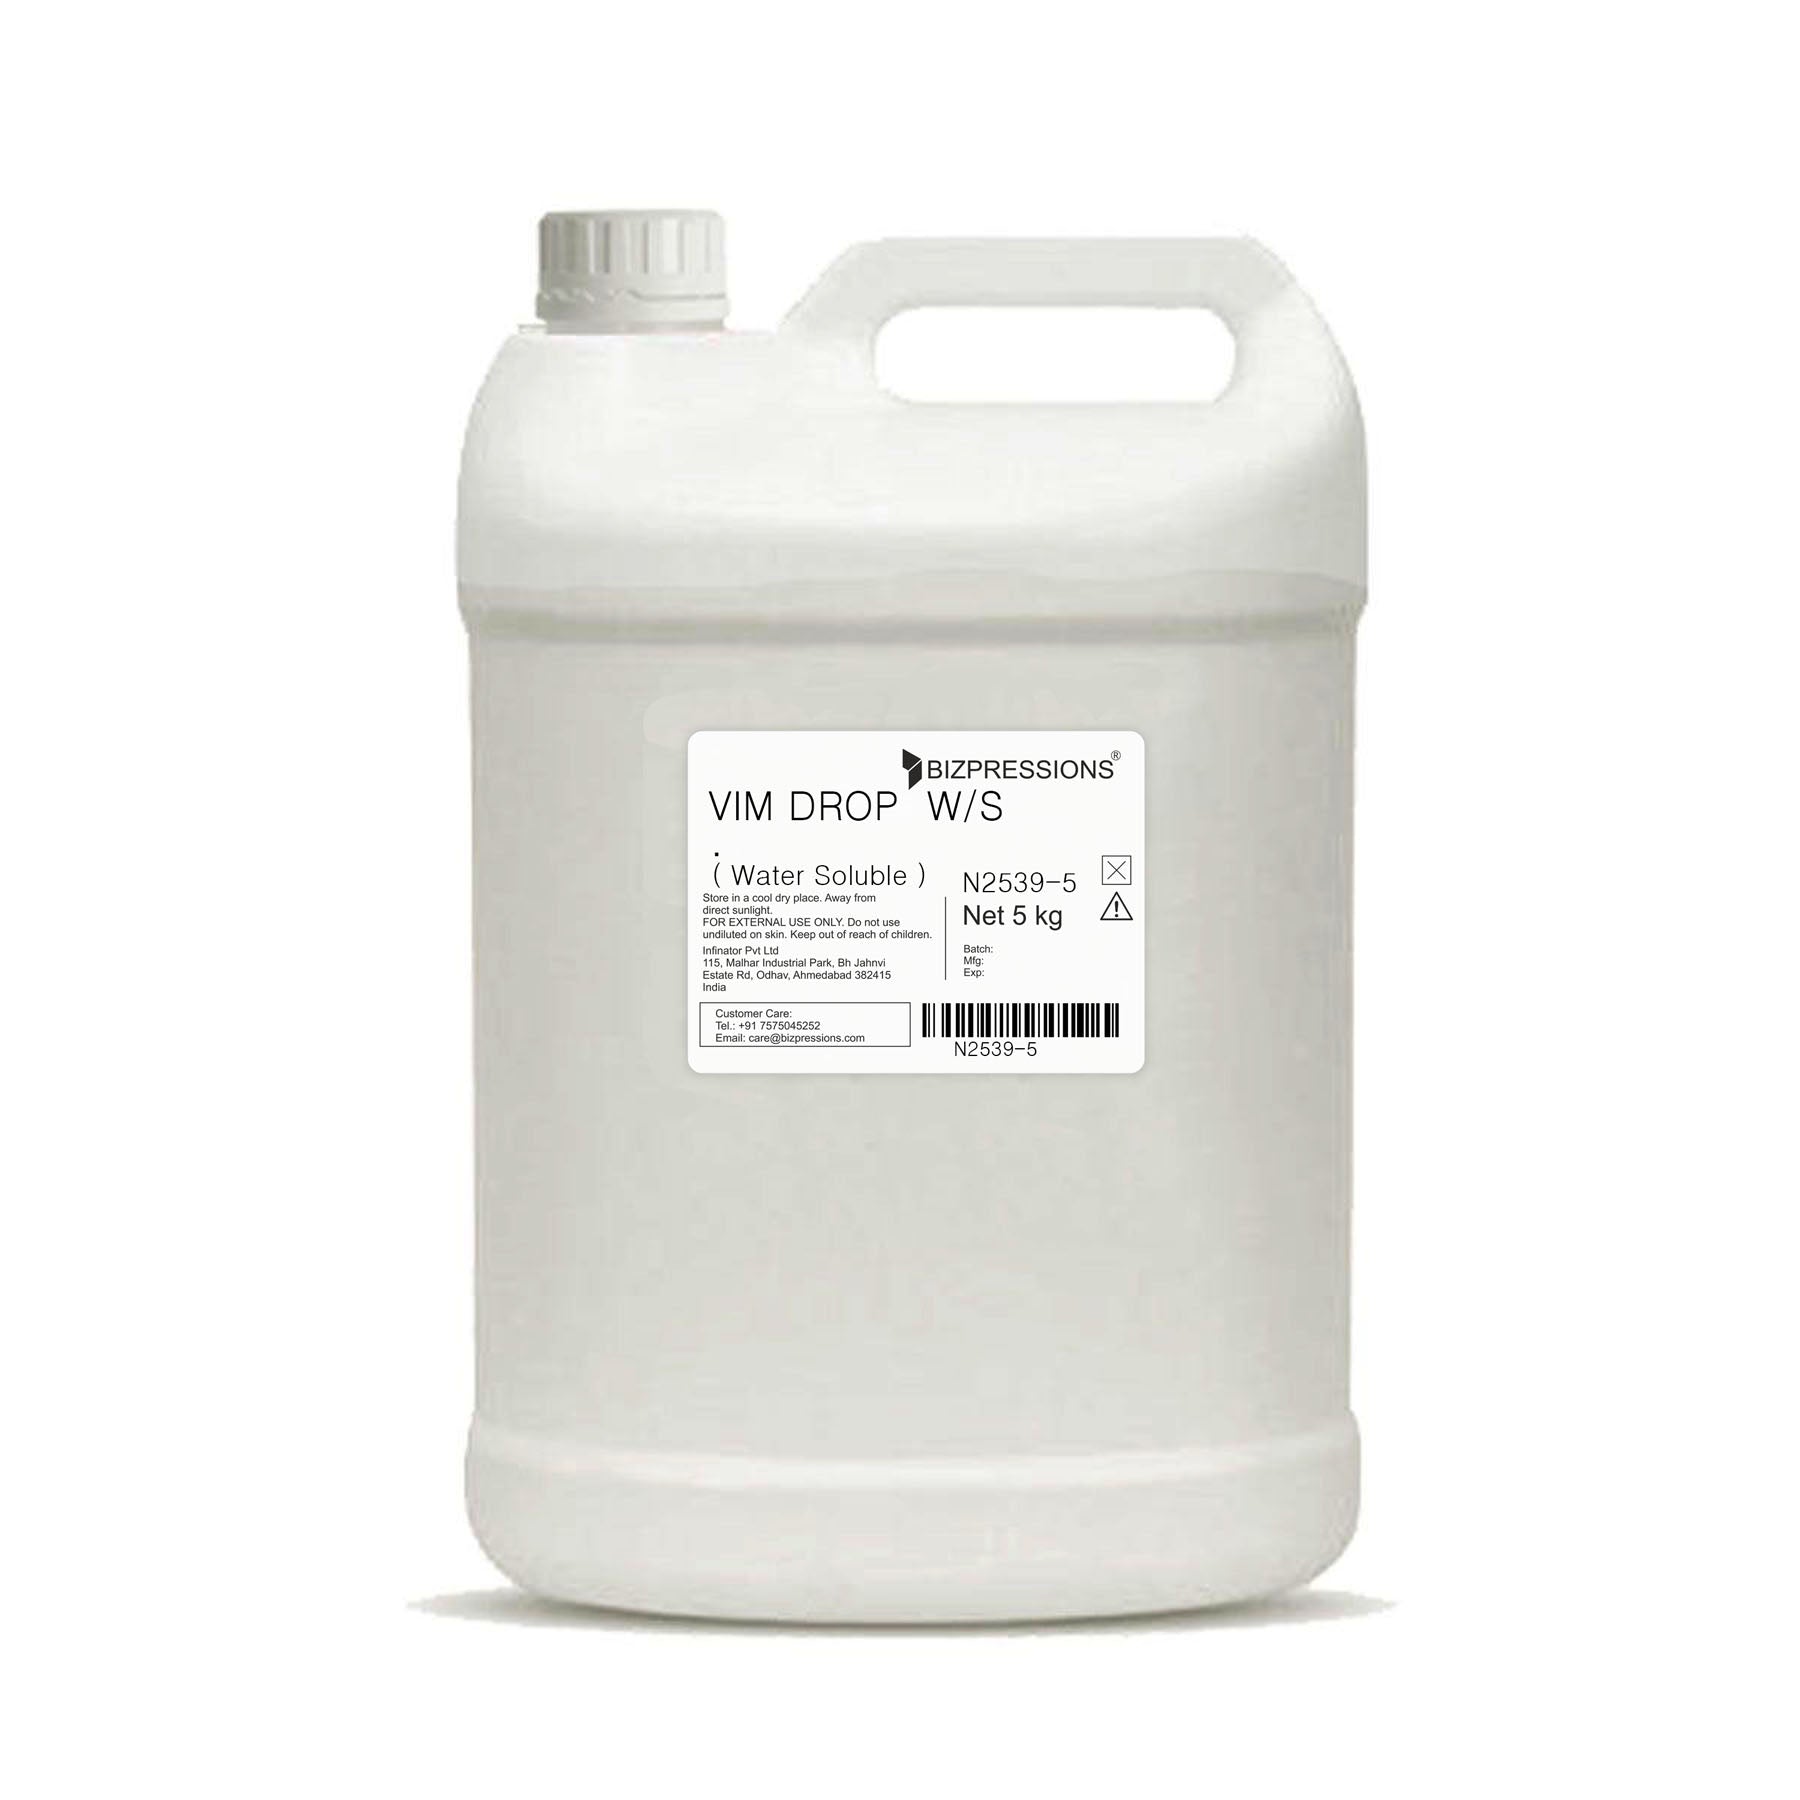 VIM DROP W/S. - Fragrance ( Water Soluble ) - 5 kg